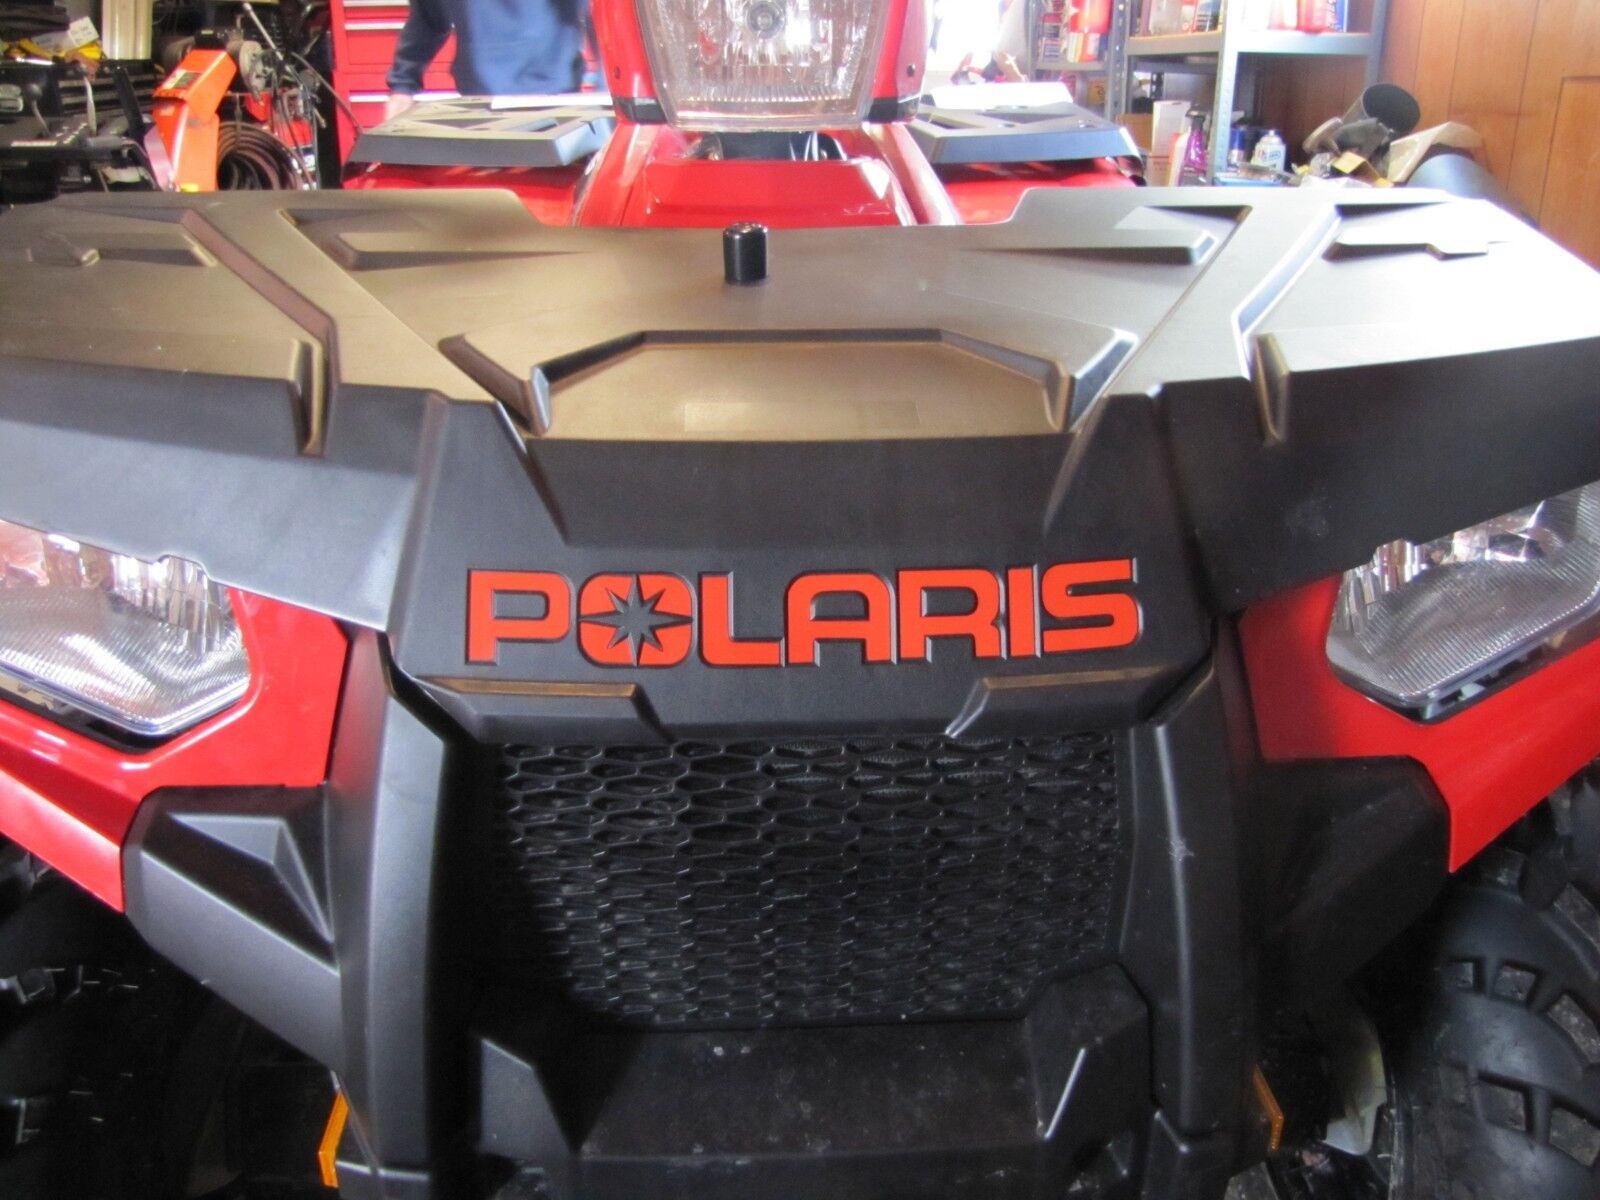 Sportsman 500 570 400 450 2011 - 2020 Polaris bumper stickers decals front rear